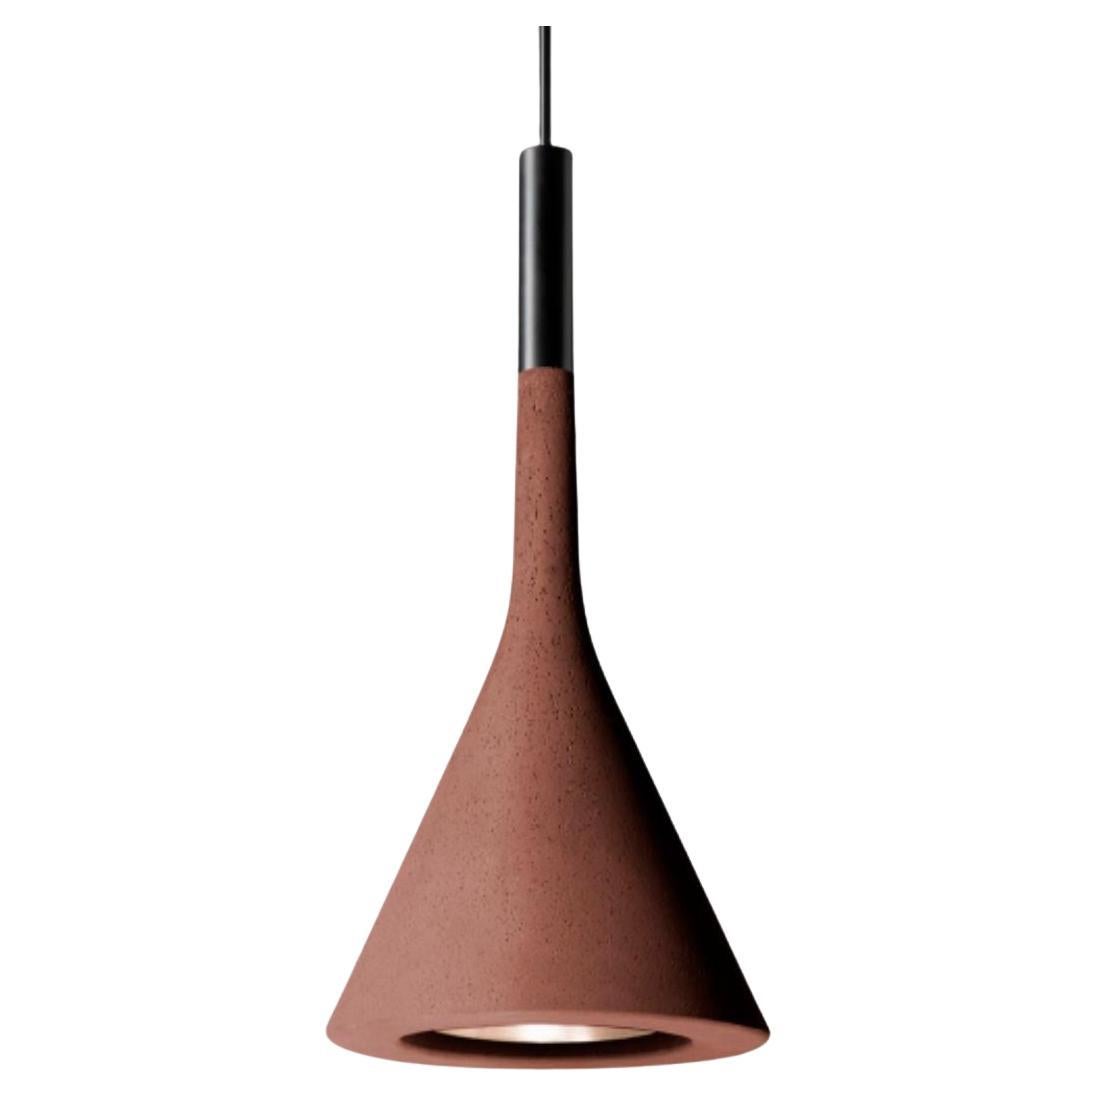 Lucidi & Pevere ‘Aplomb’ Concrete Pendant Lamp in Brick Red for Foscarini